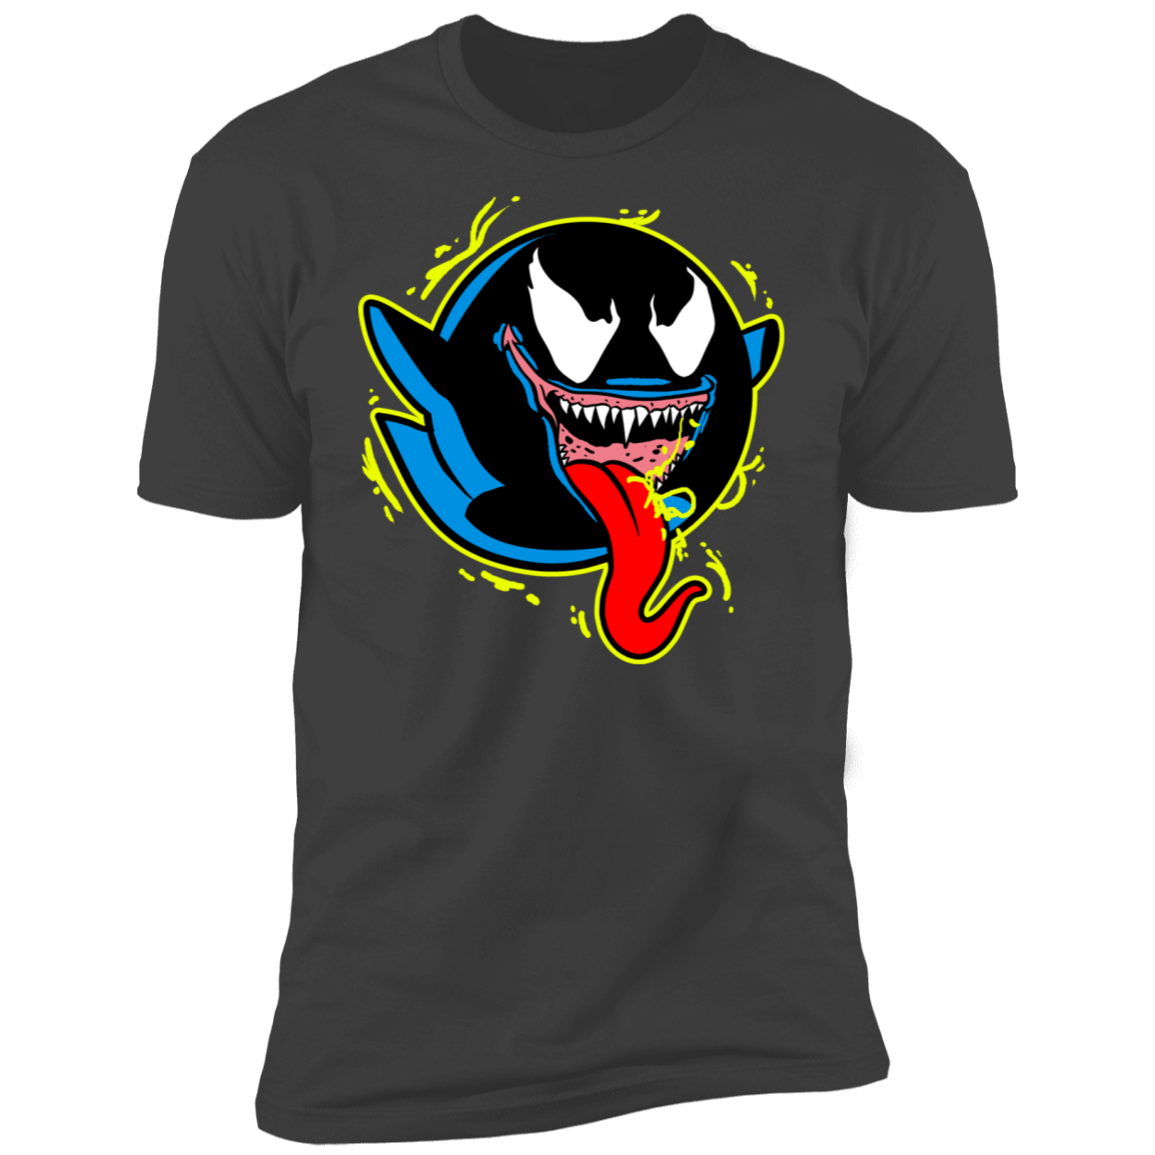 Boo Venom Men's Premium T-Shirt